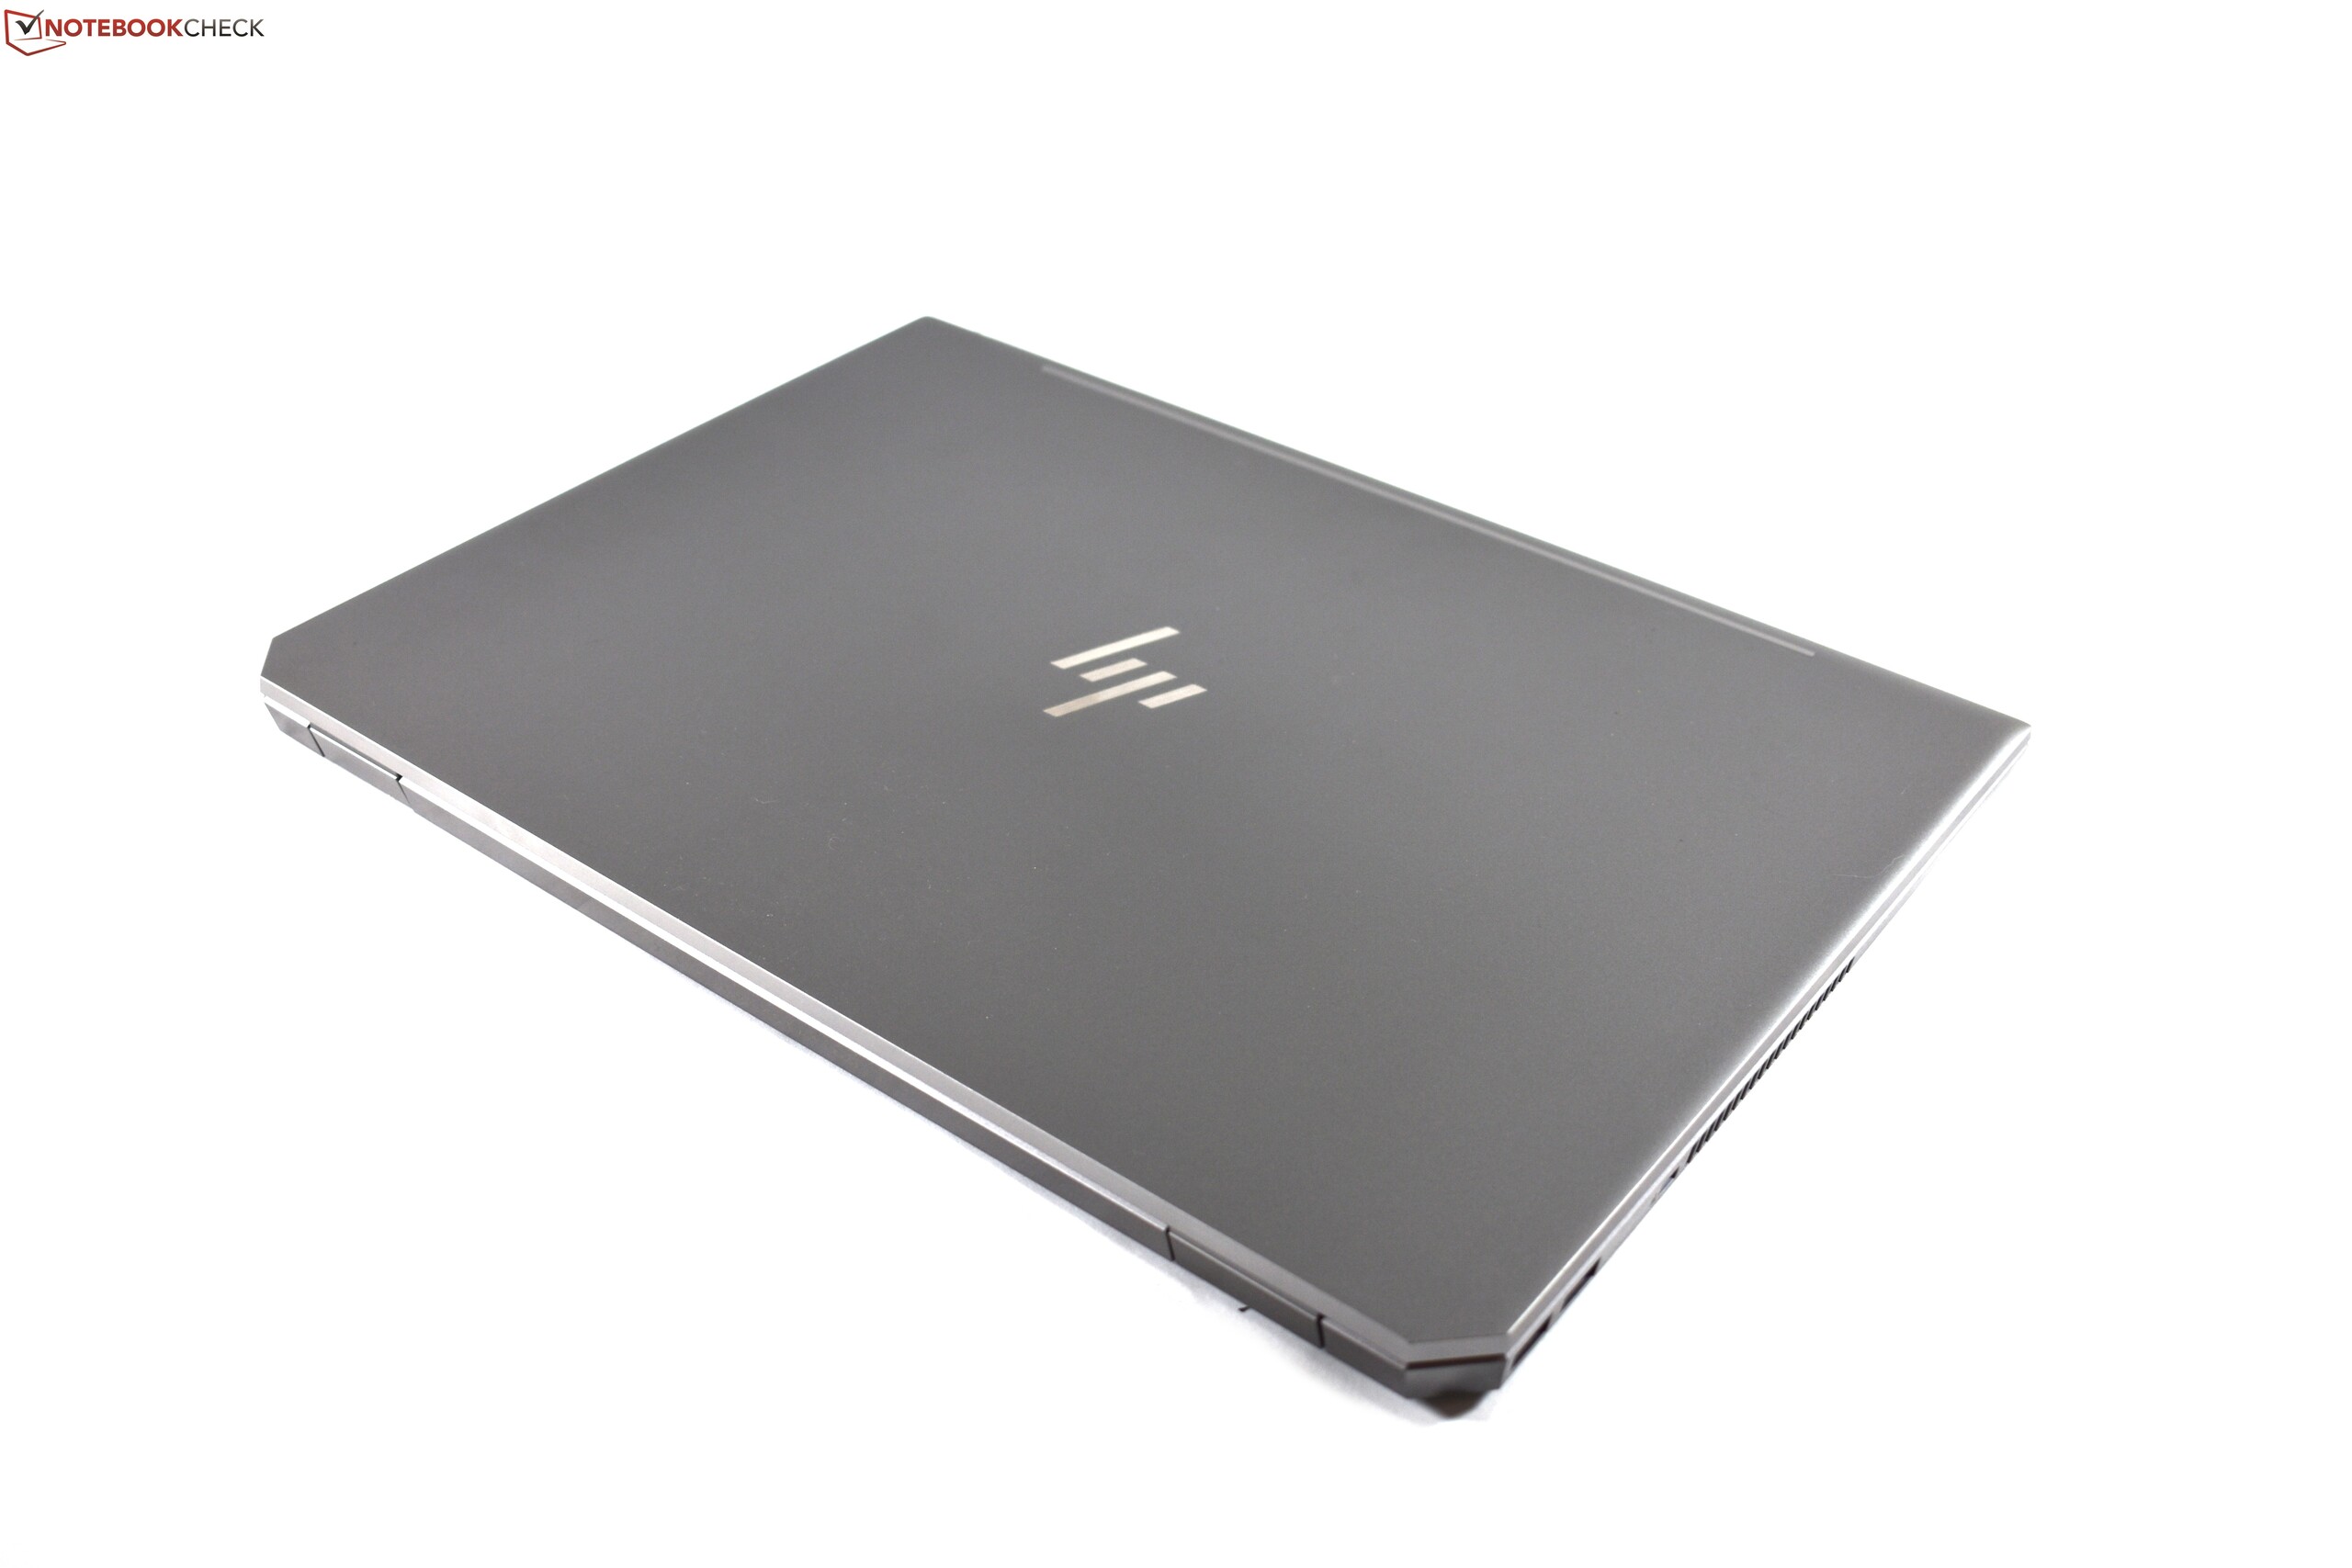 HP ZBook Studio G5 (i7, P1000, 4K) Workstation Review